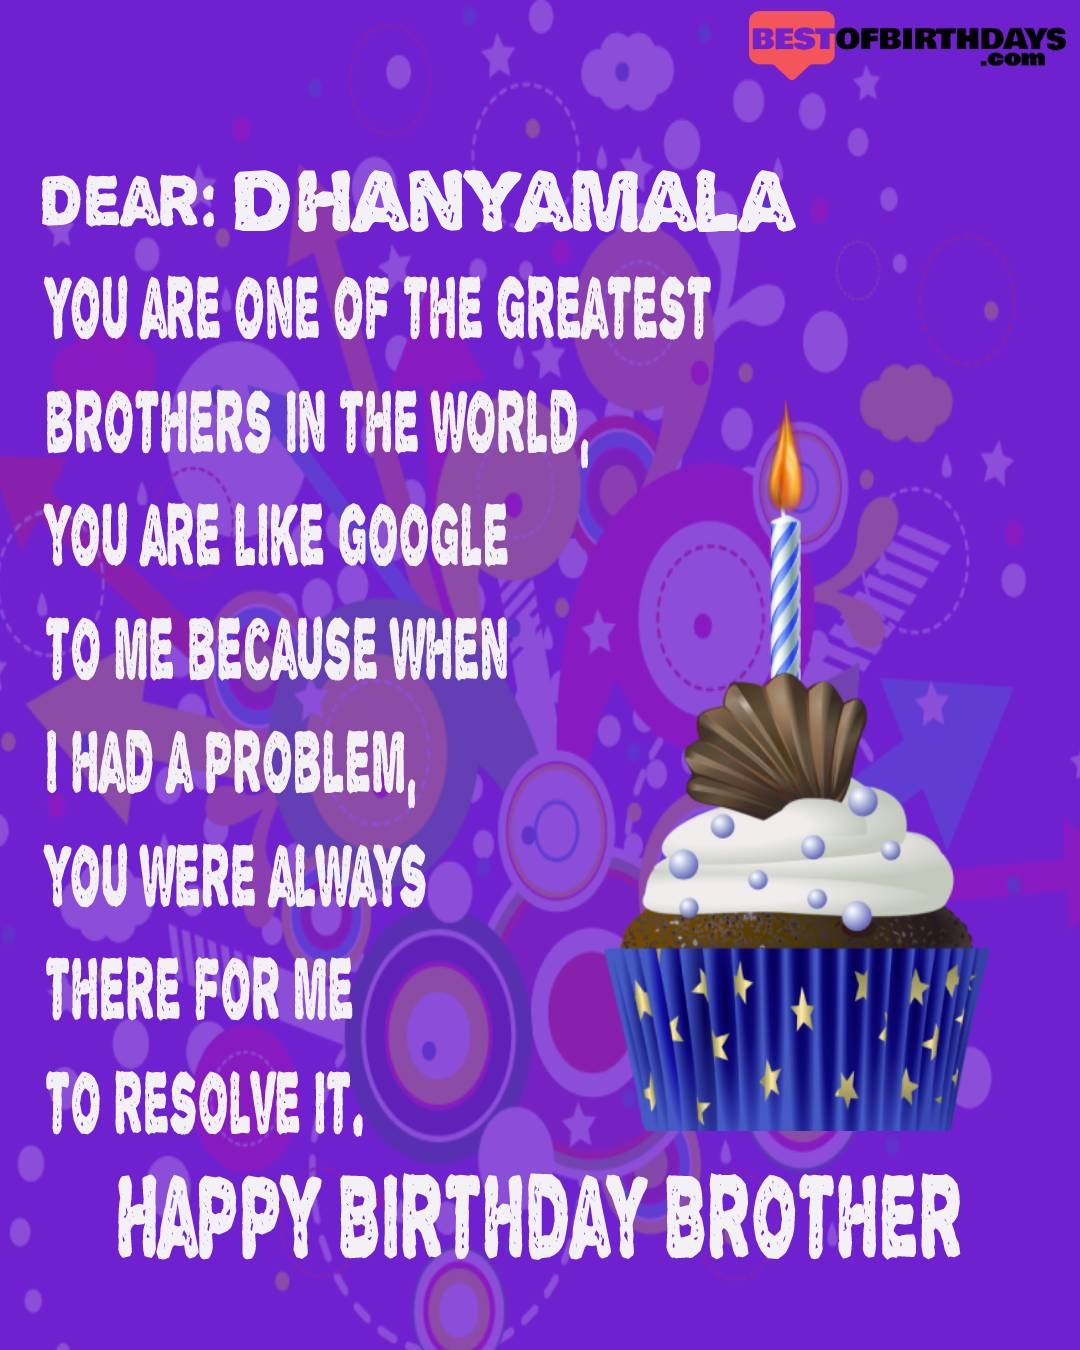 Happy birthday dhanyamala bhai brother bro